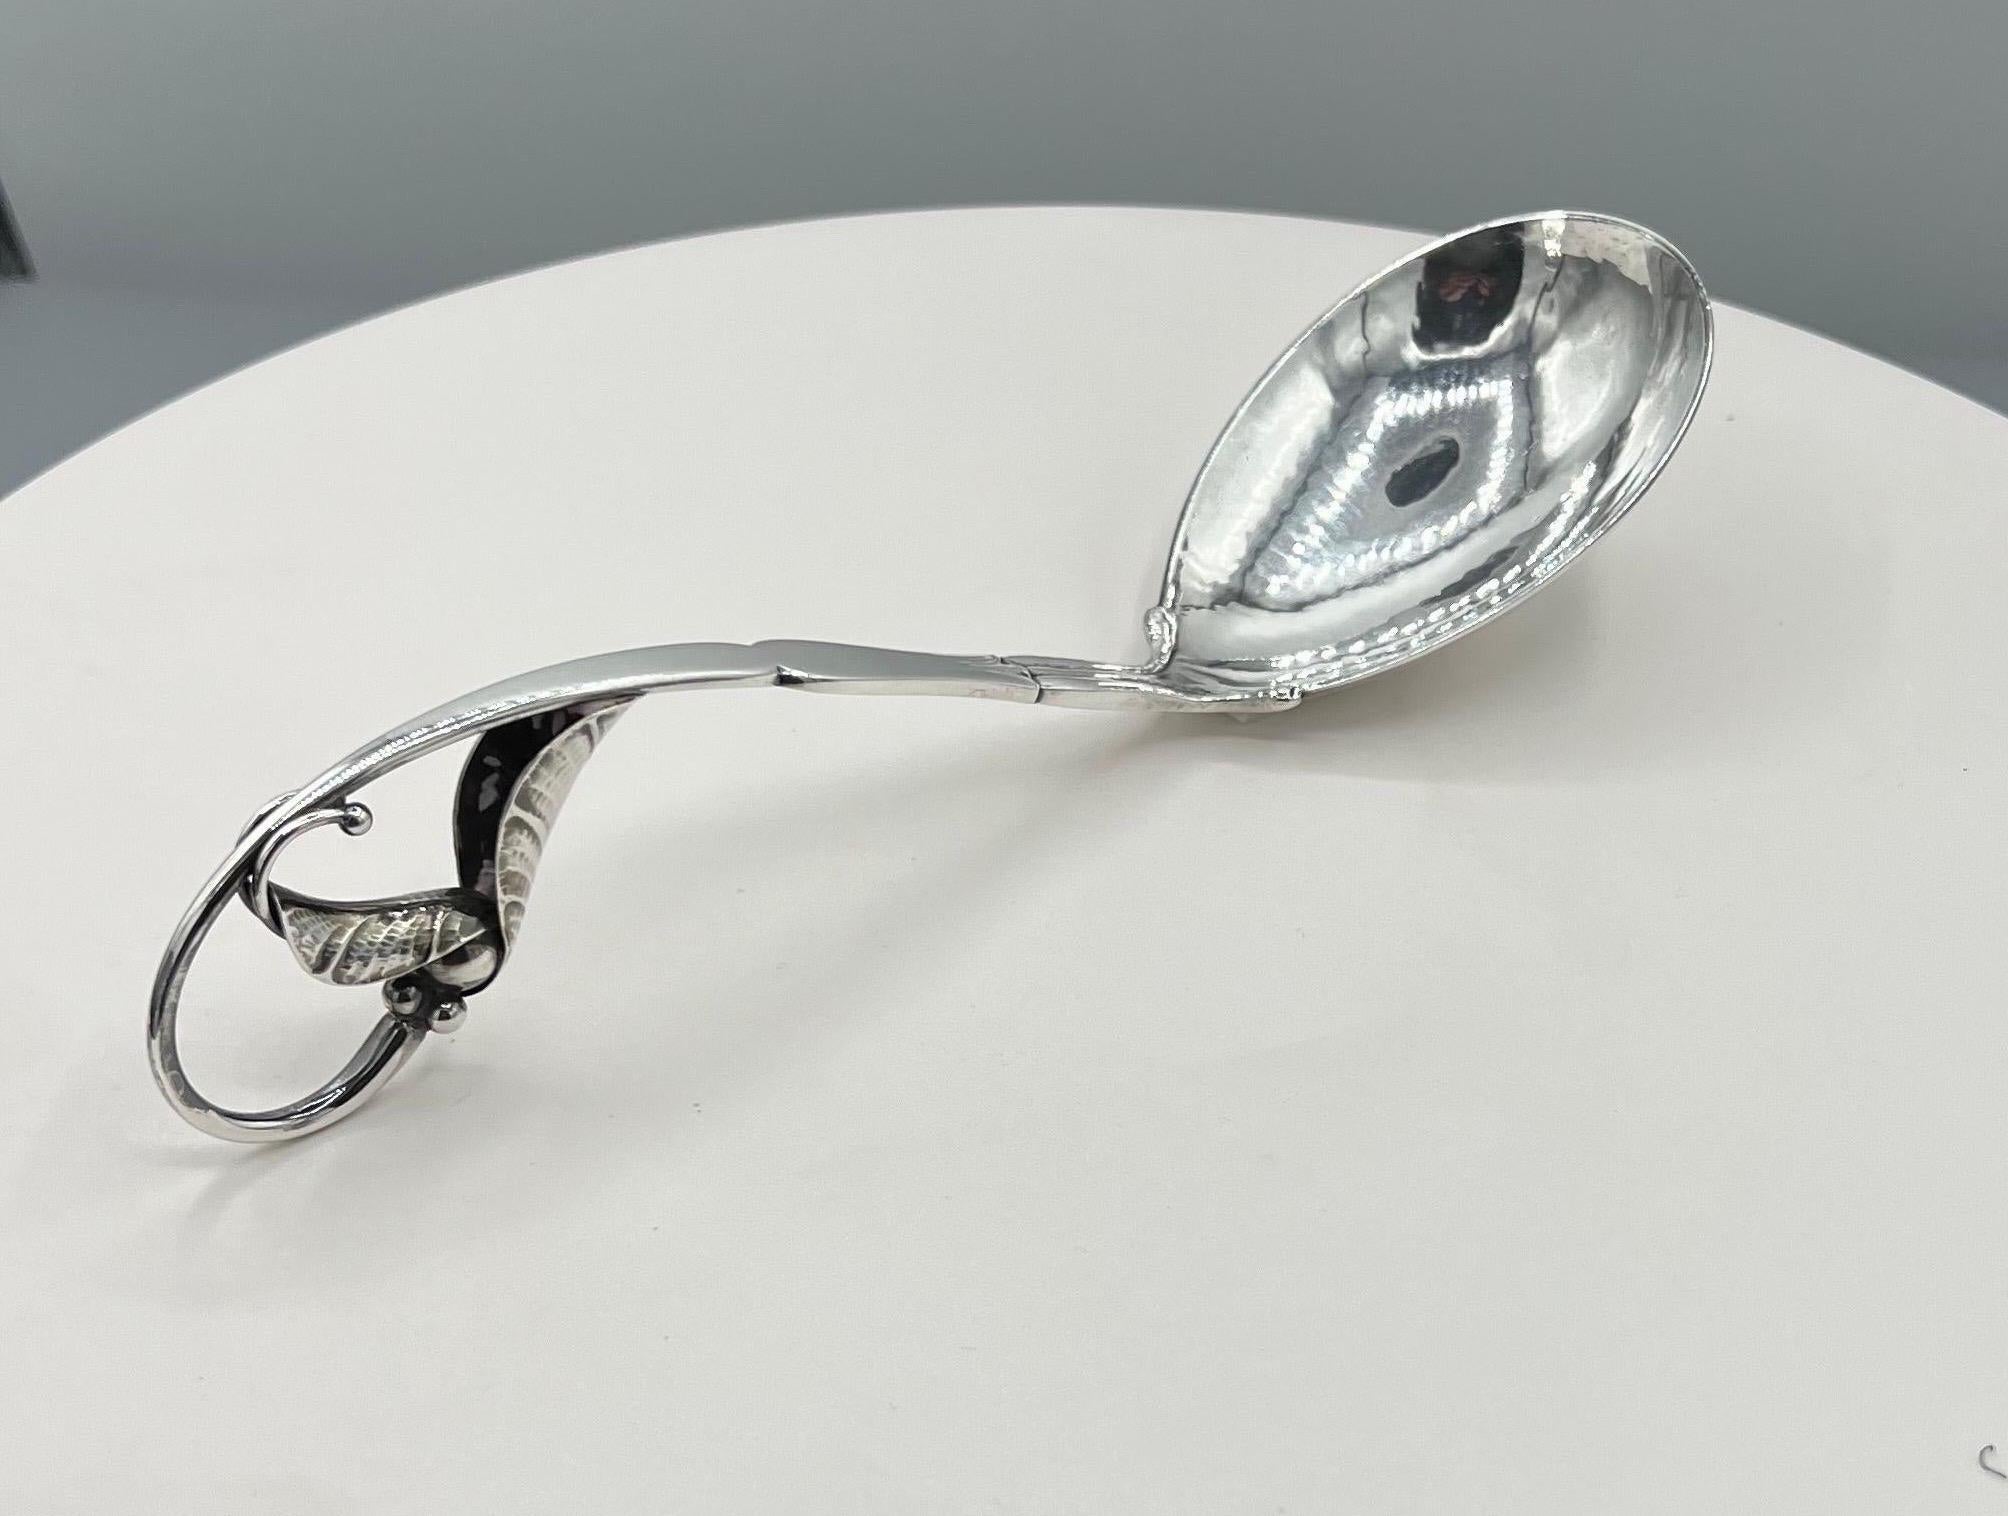 Polished Georg Jensen Sterling Silver Ornamental Serving Spoon #141 For Sale